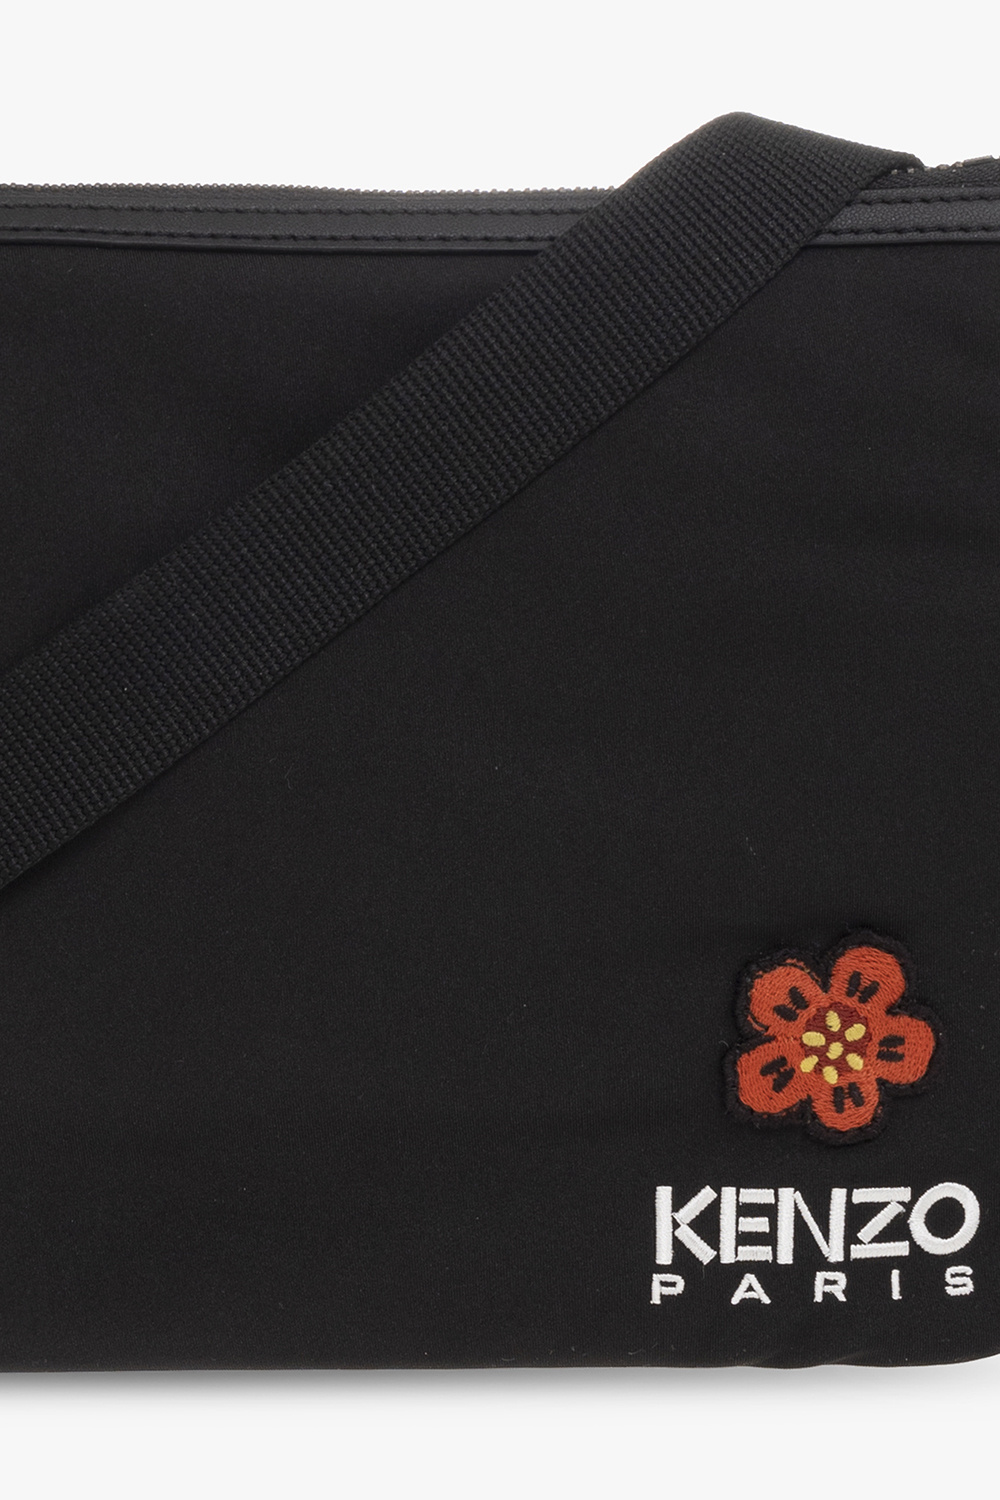 Kenzo small Marcel knot crossbody bag